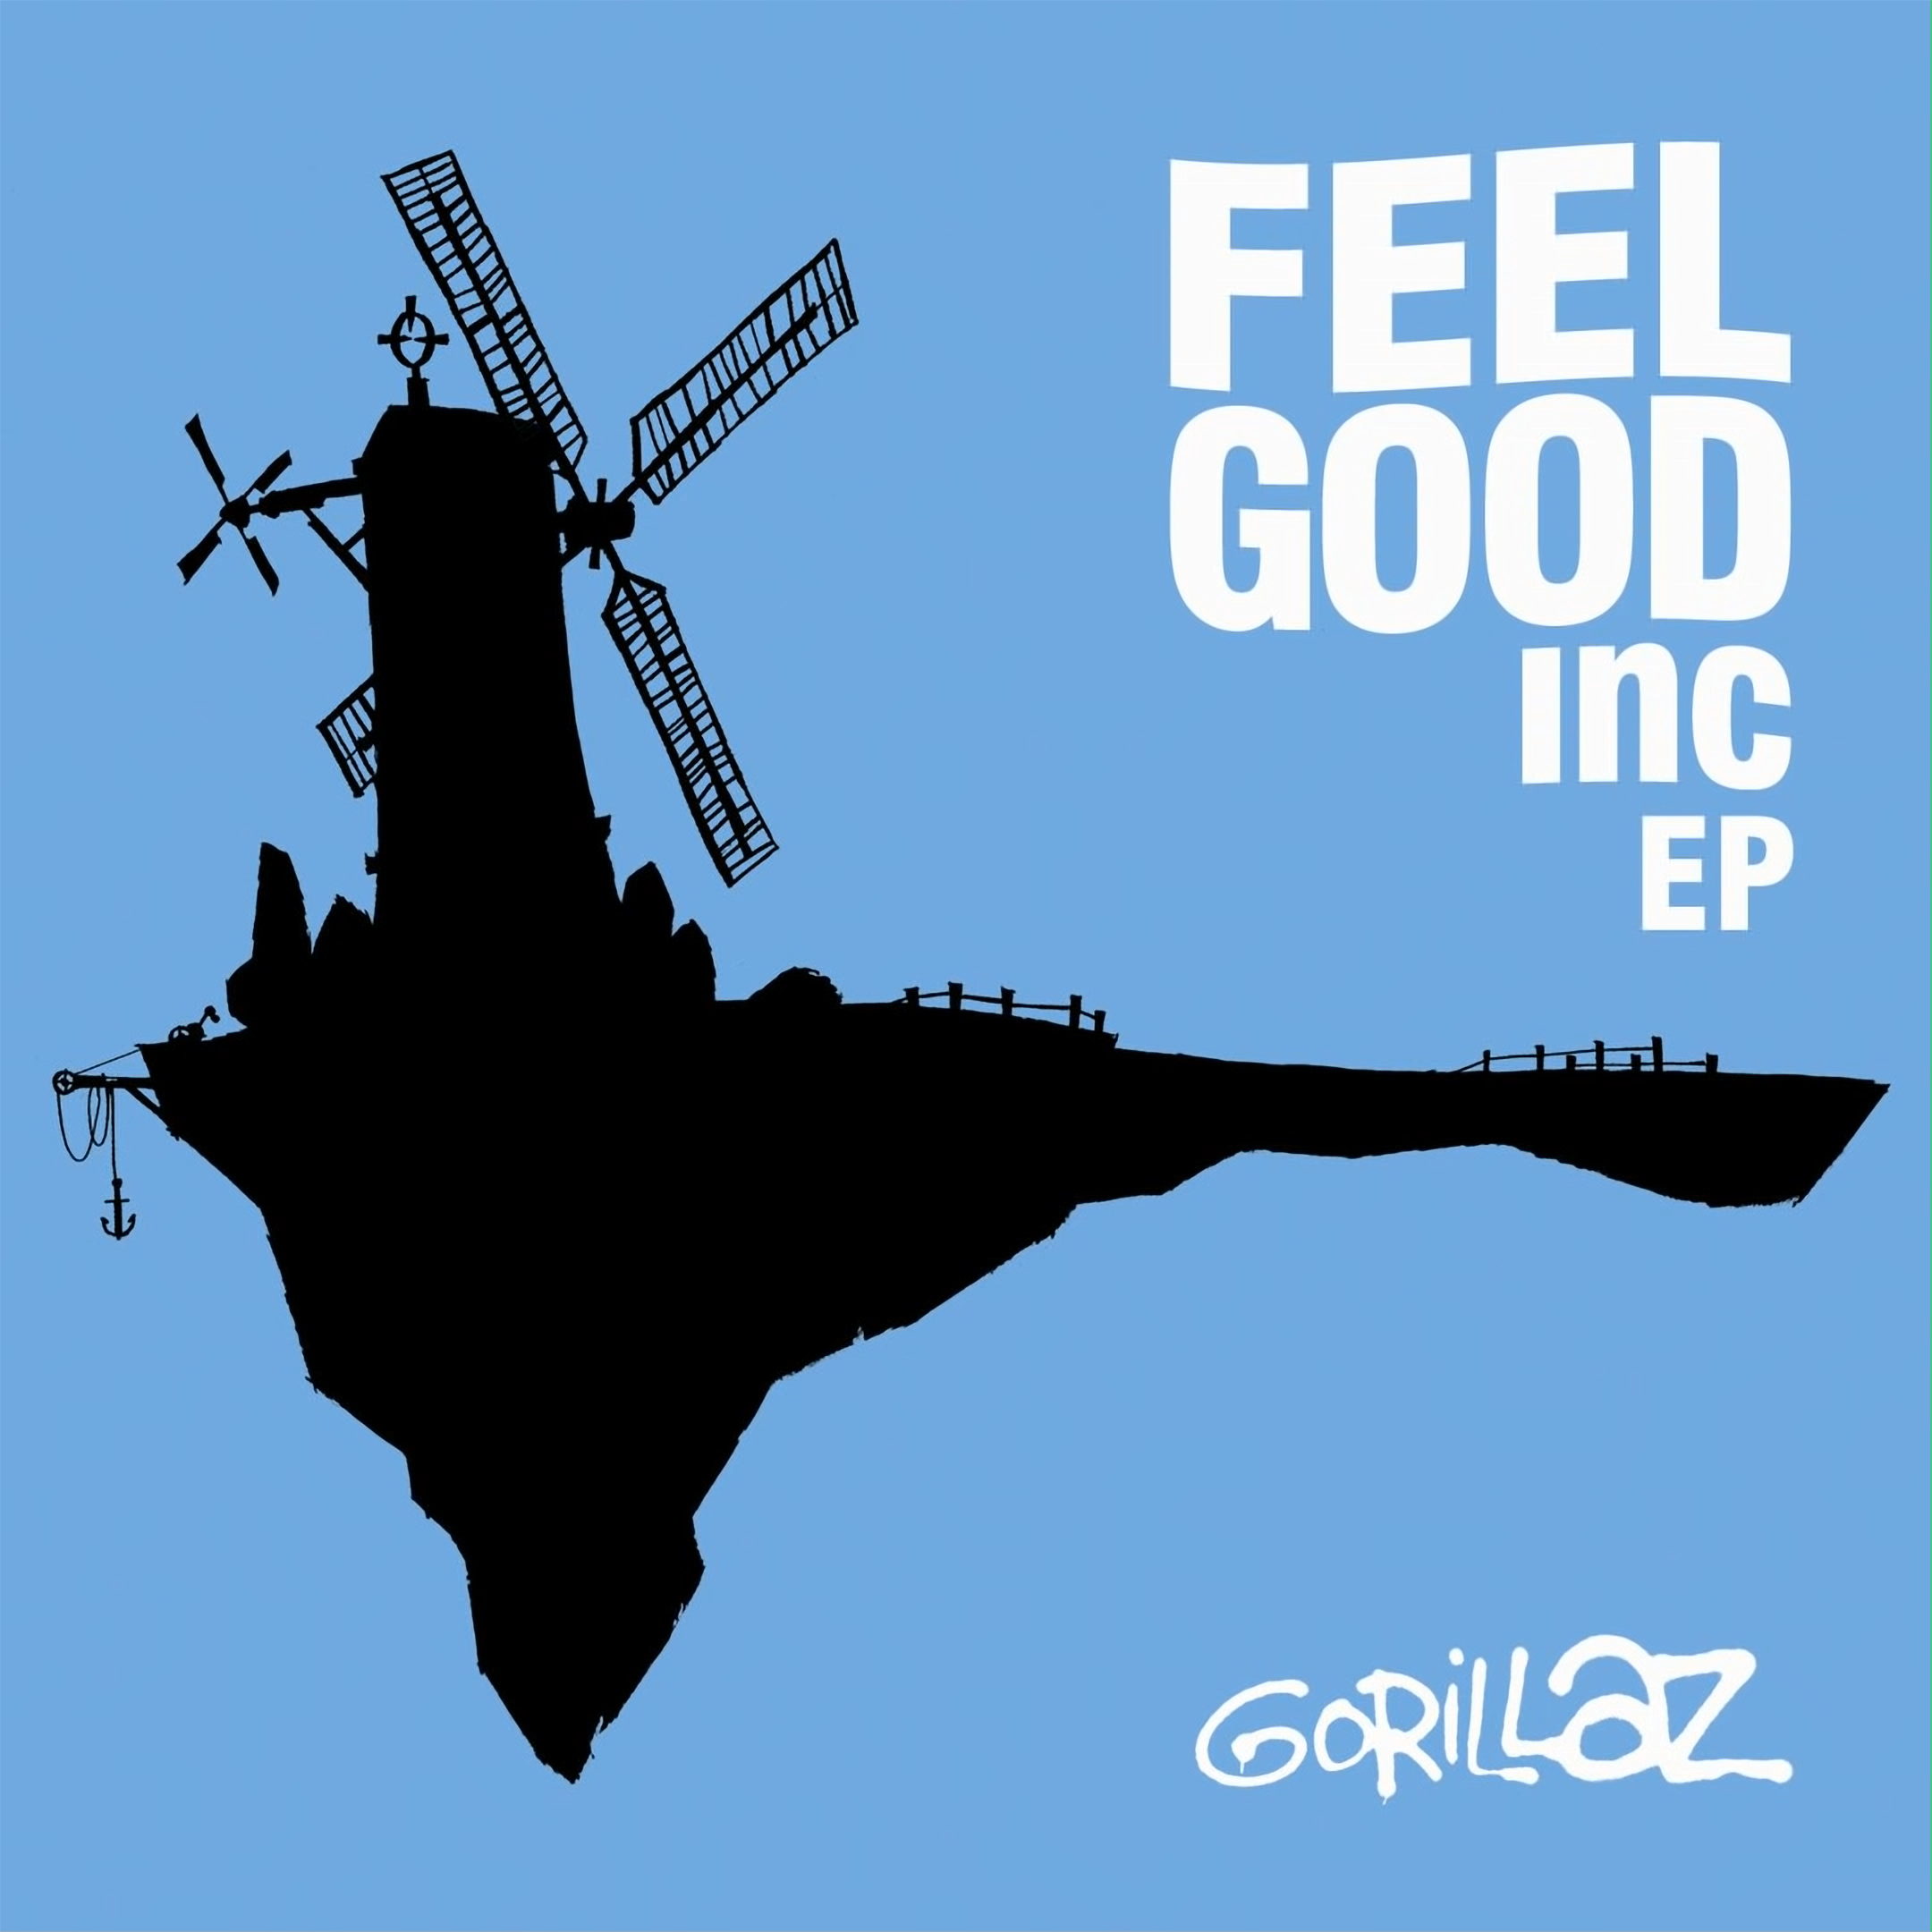 Гориллаз feeling good. Feel good Inc. Gorillaz feel good Inc. Feel good Inc обложка. Gorillaz feel good Inc обложка.